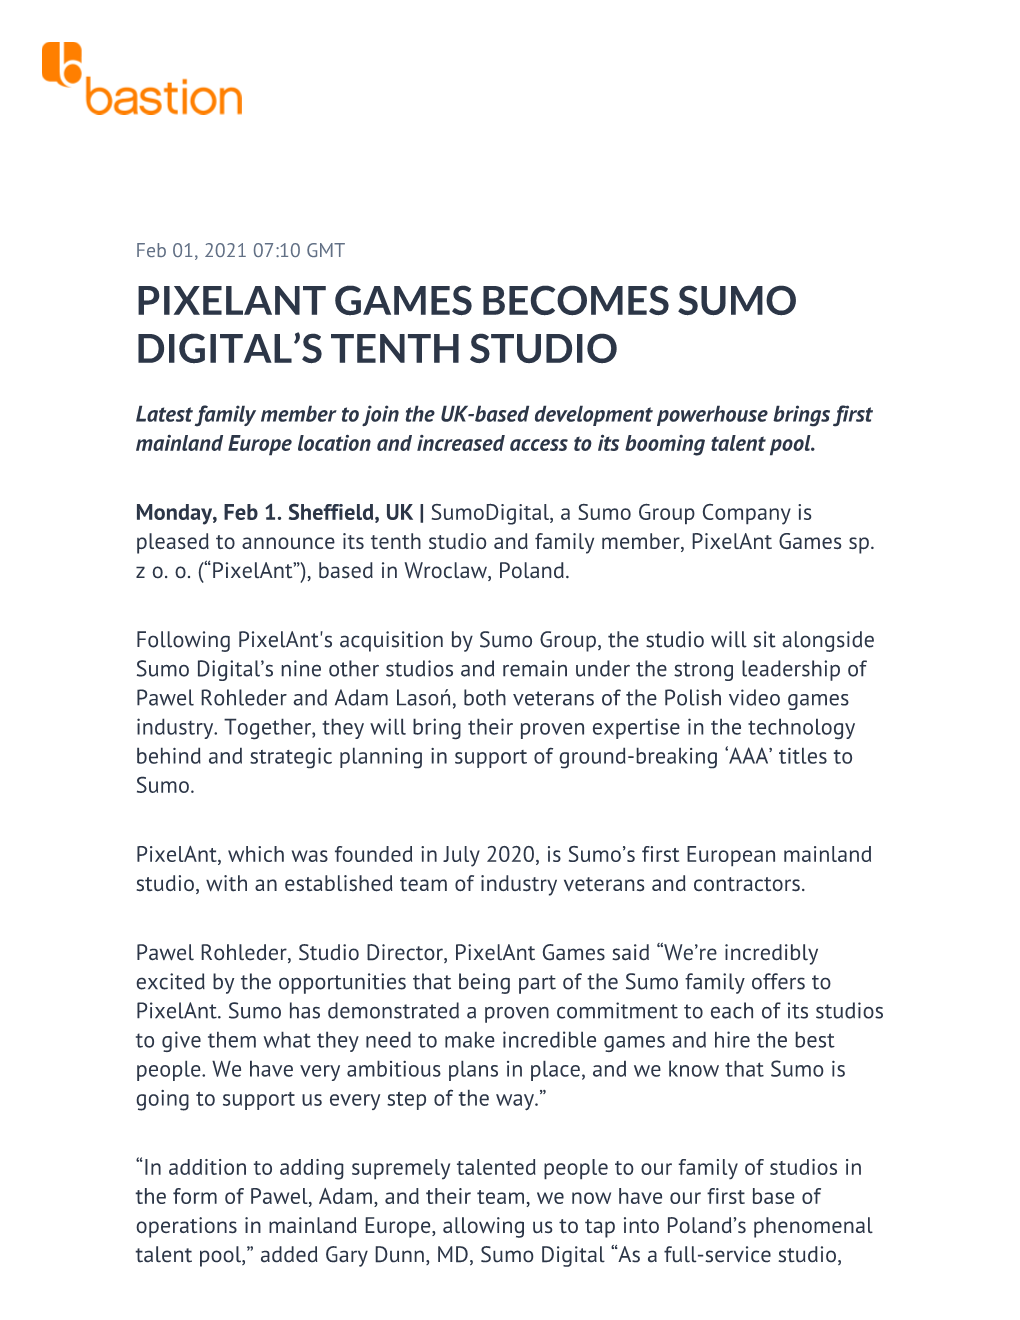 Pixelant Games Becomes Sumo Digital's Tenth Studio